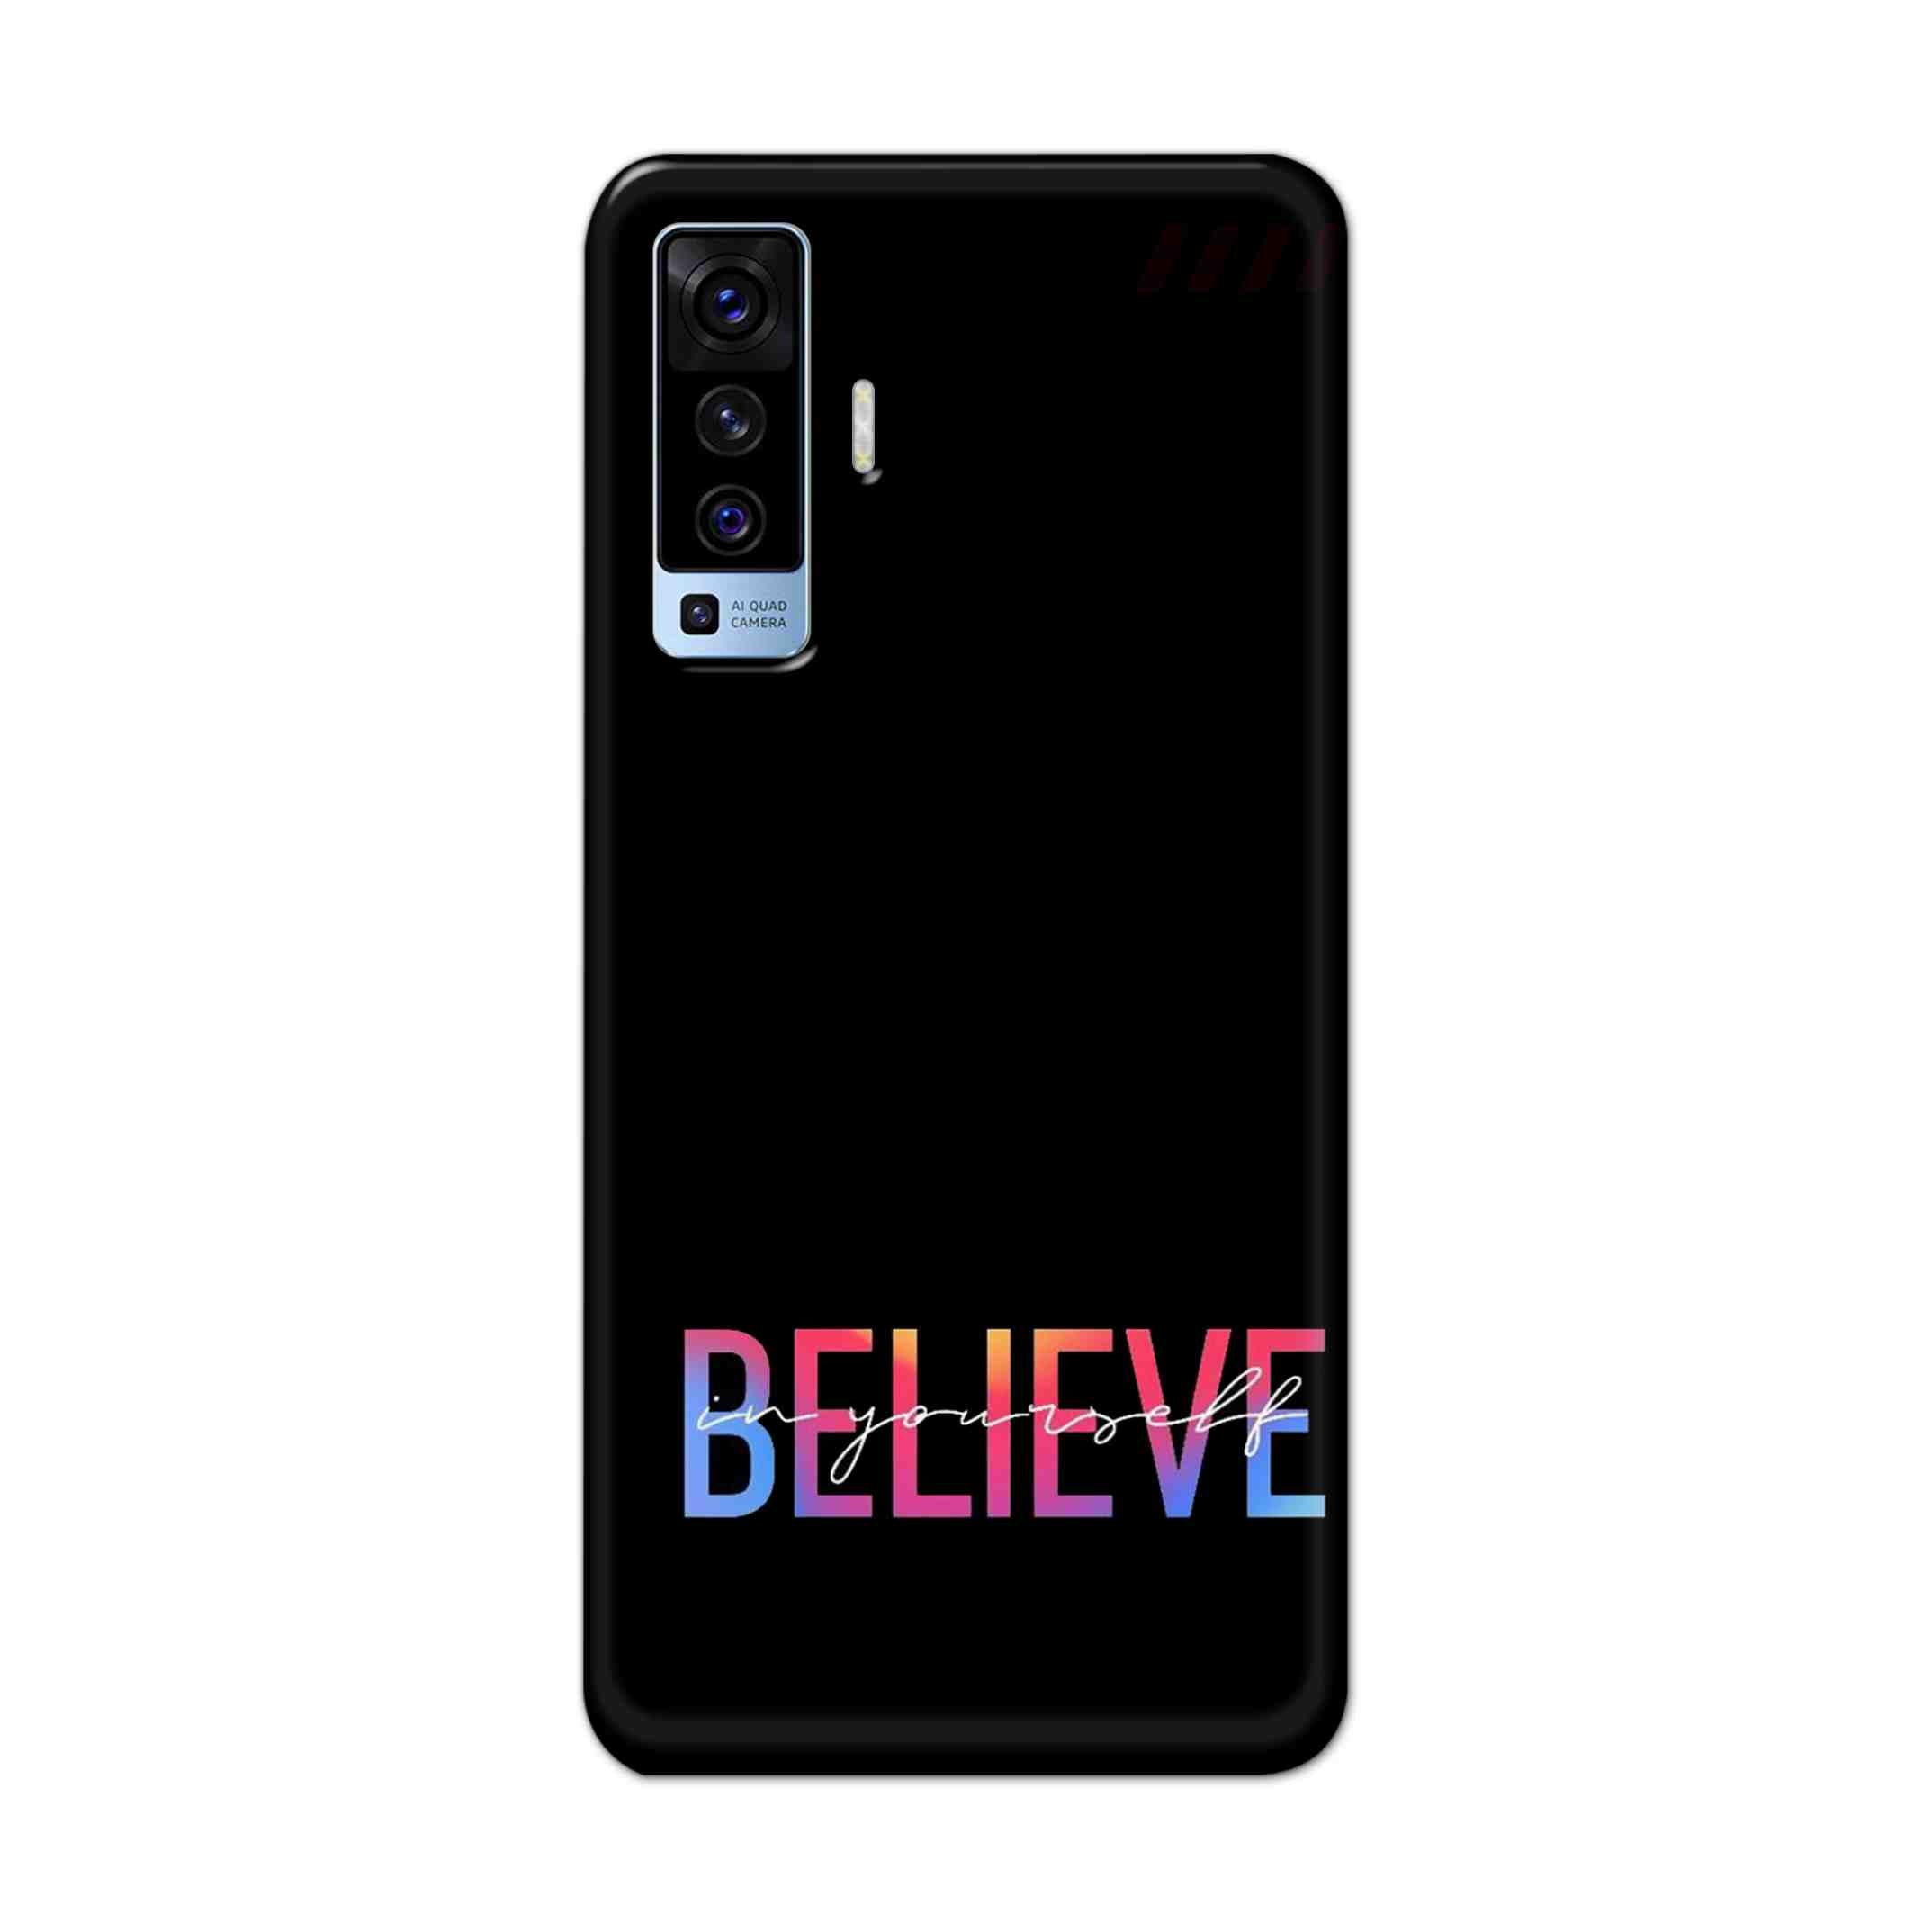 Buy Believe Hard Back Mobile Phone Case Cover For Vivo X50 Online